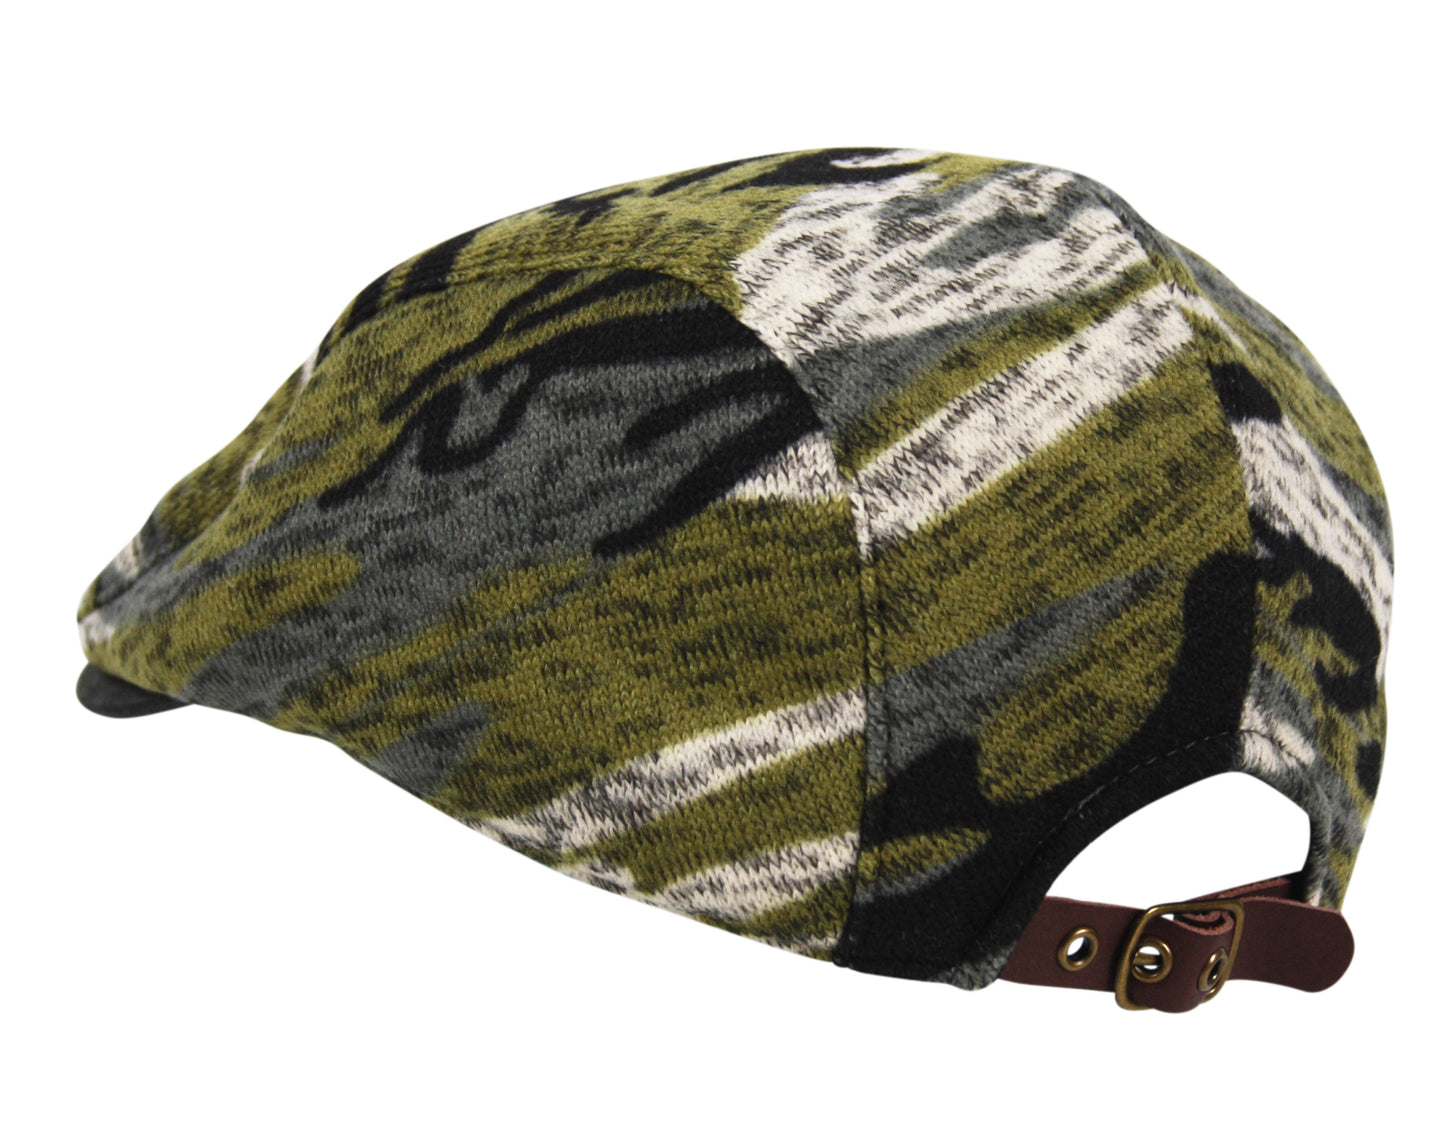 Men's Army Camo Fleece Lined Warm Beanie Hat in Woodland Green